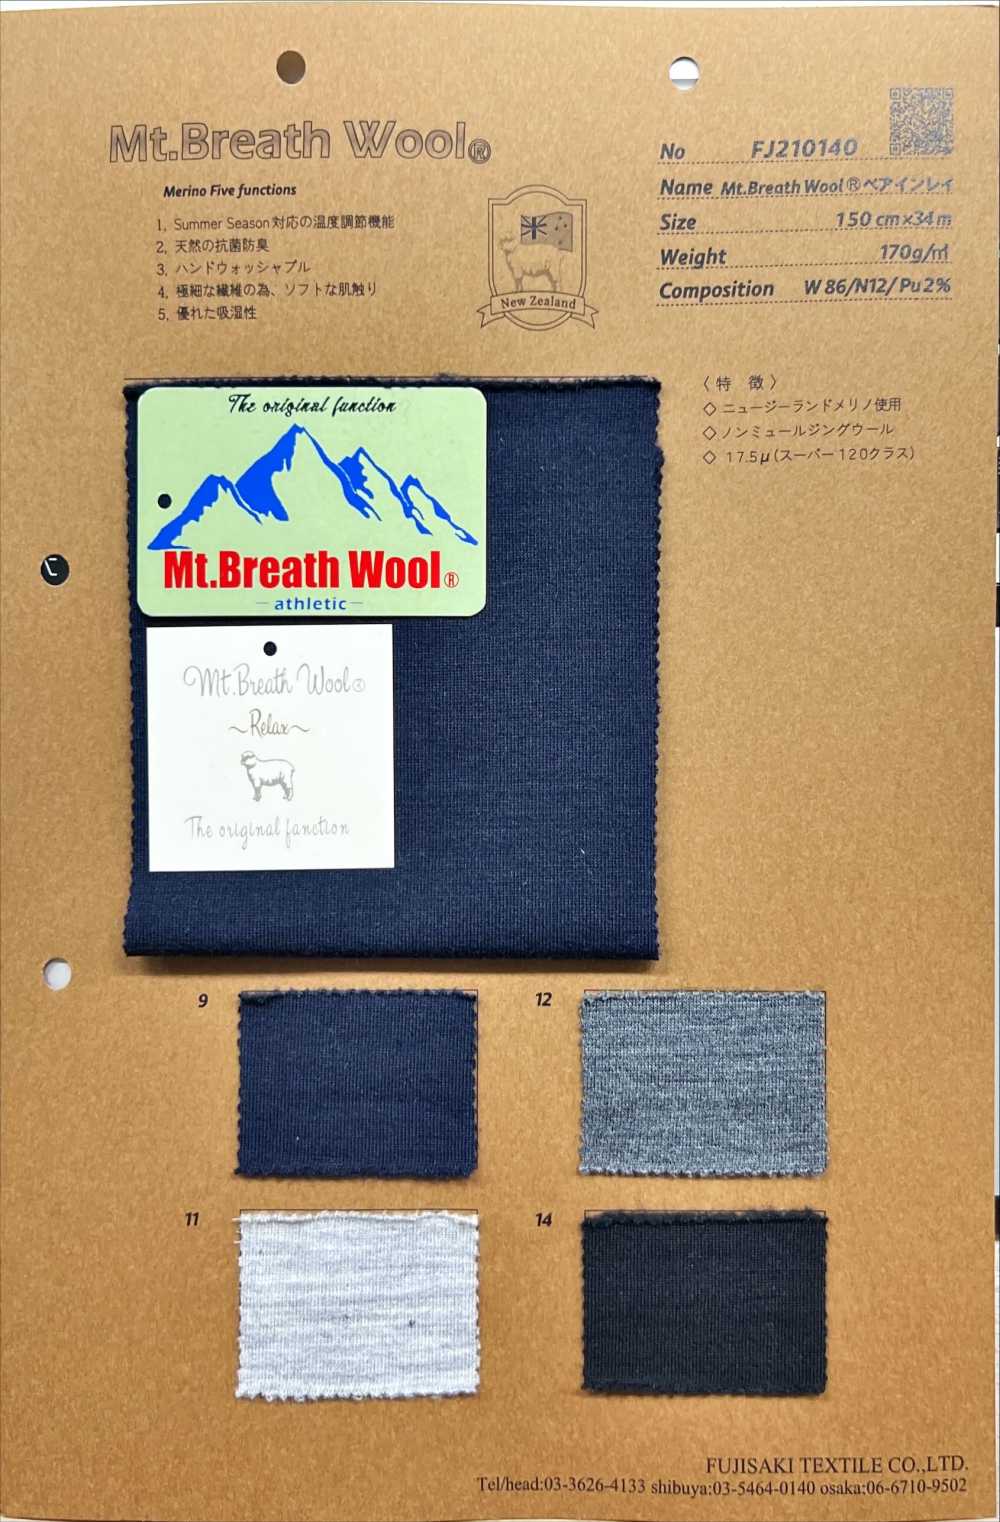 FJ210140 Mt.Breath 羊毛熊鑲嵌[面料] Fujisaki Textile